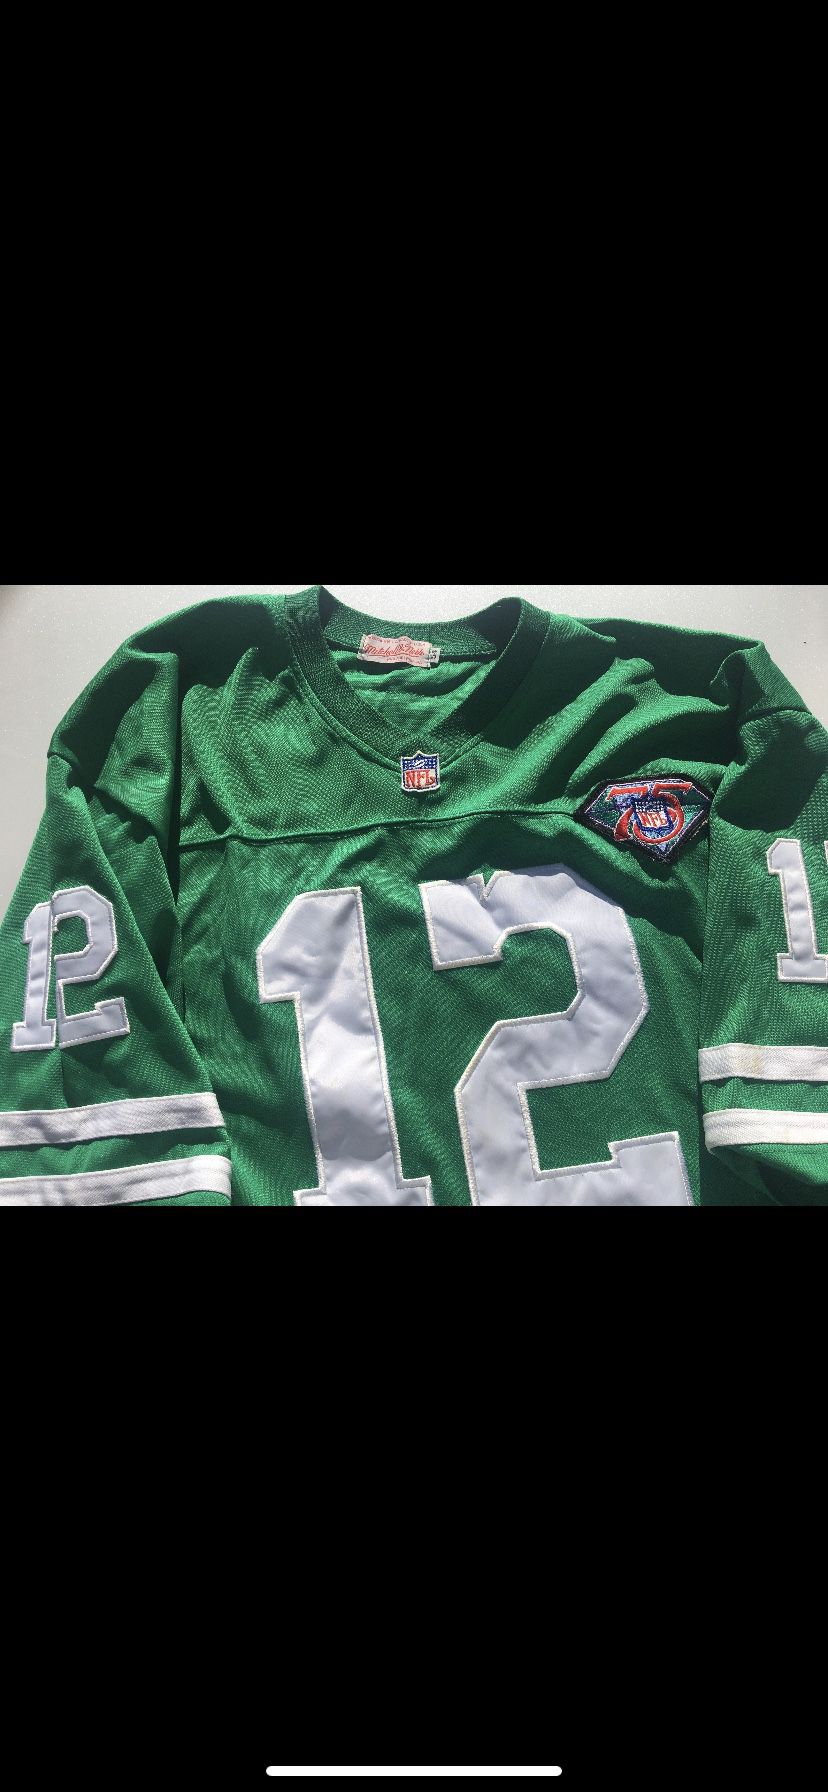 Cunningham 1994 NFL, Mitchell/ Ness size 54 jersey $20